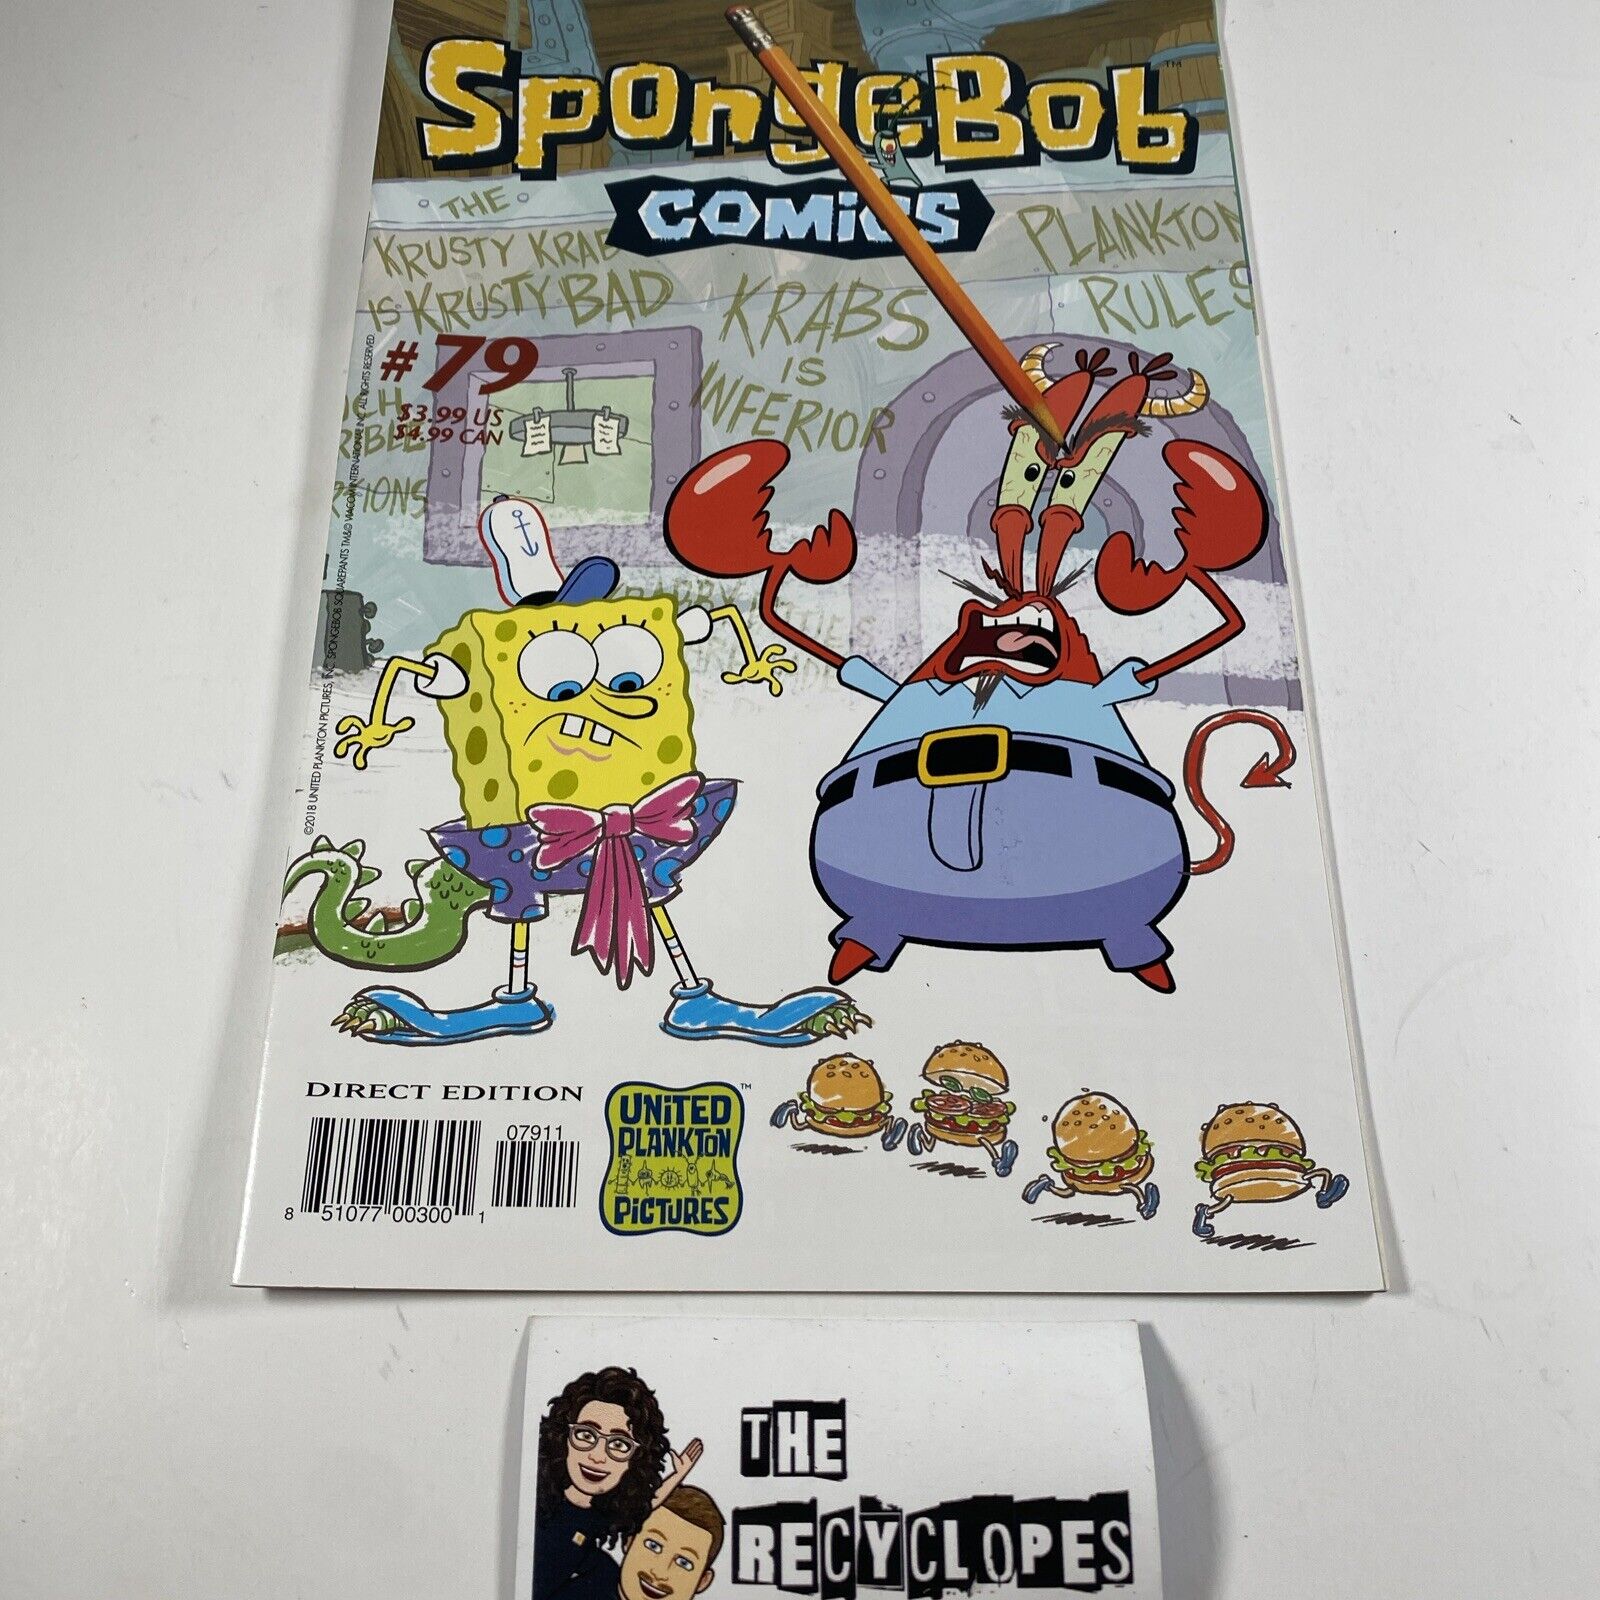 Spongebob Comics #79 2018 United Plankton Pictures Nice Condition